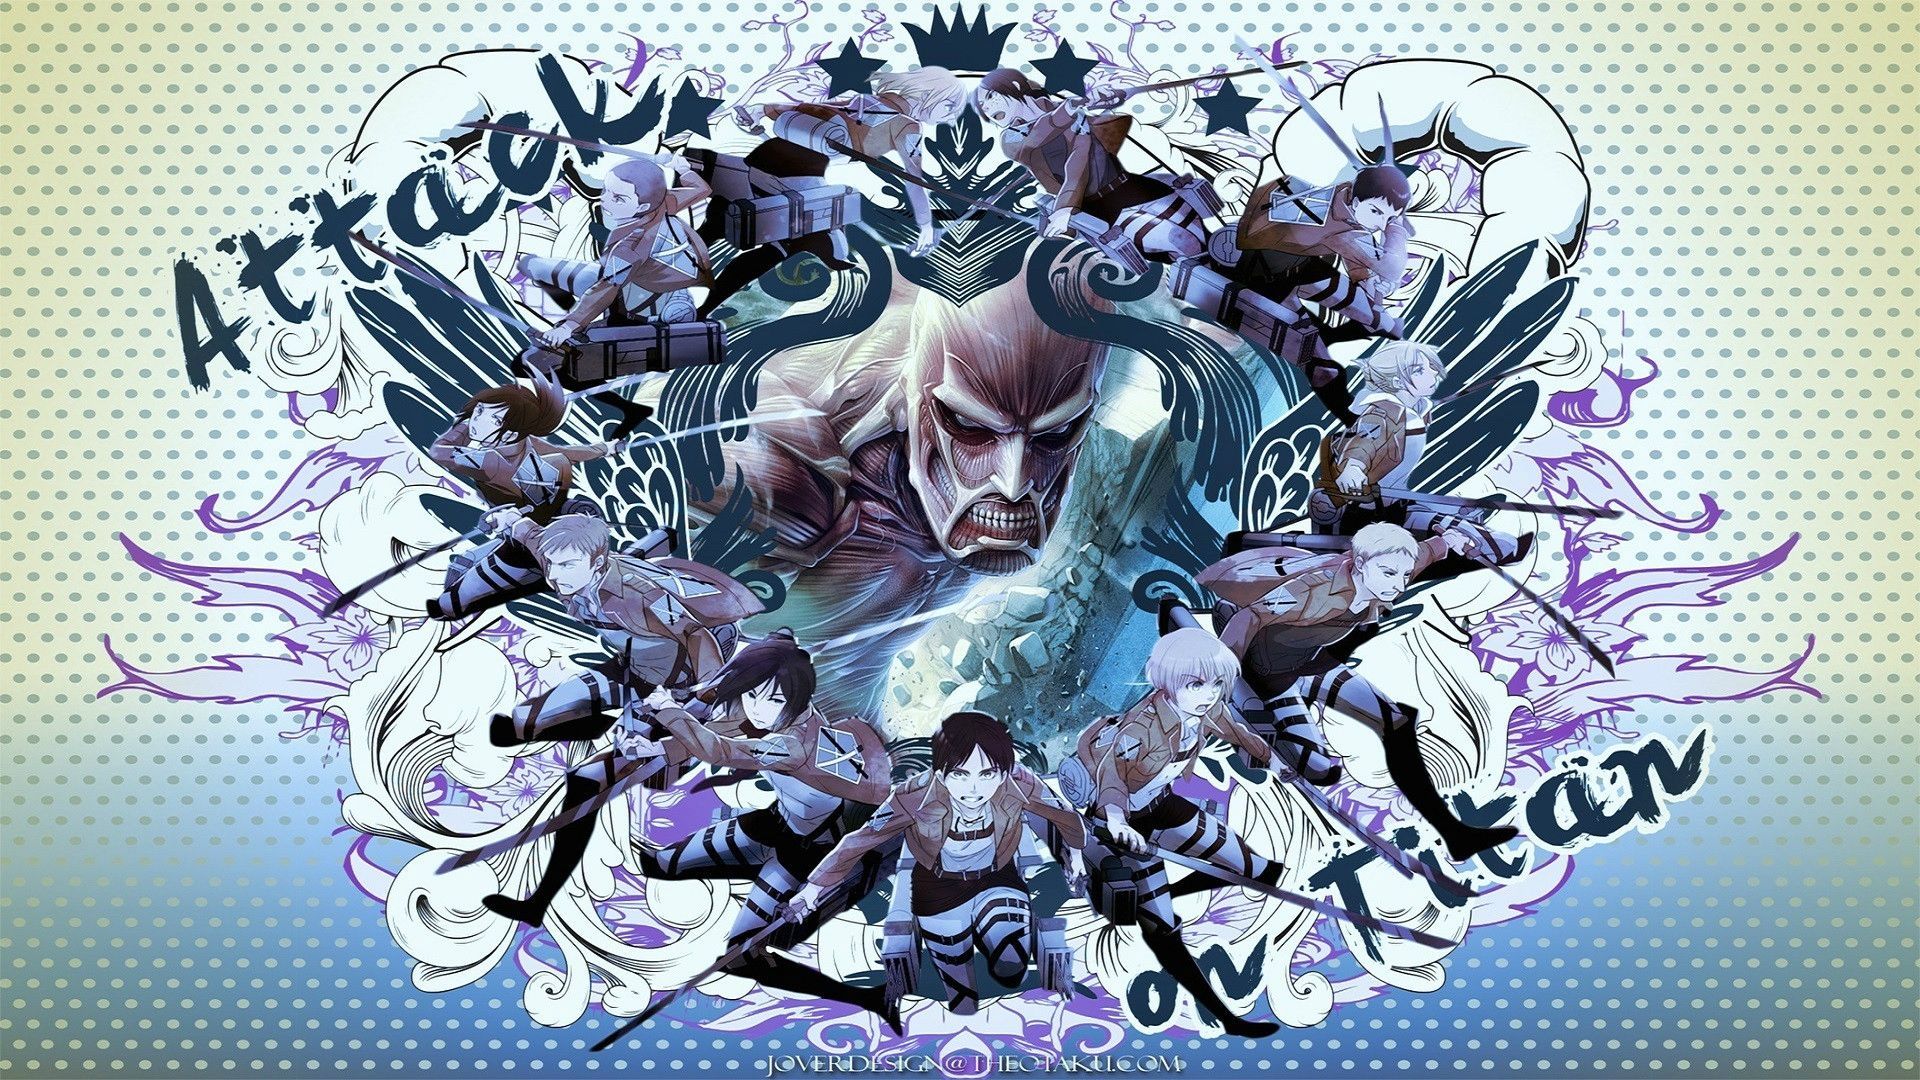 Anime Attack On Titan Wallpaper:1920x1080